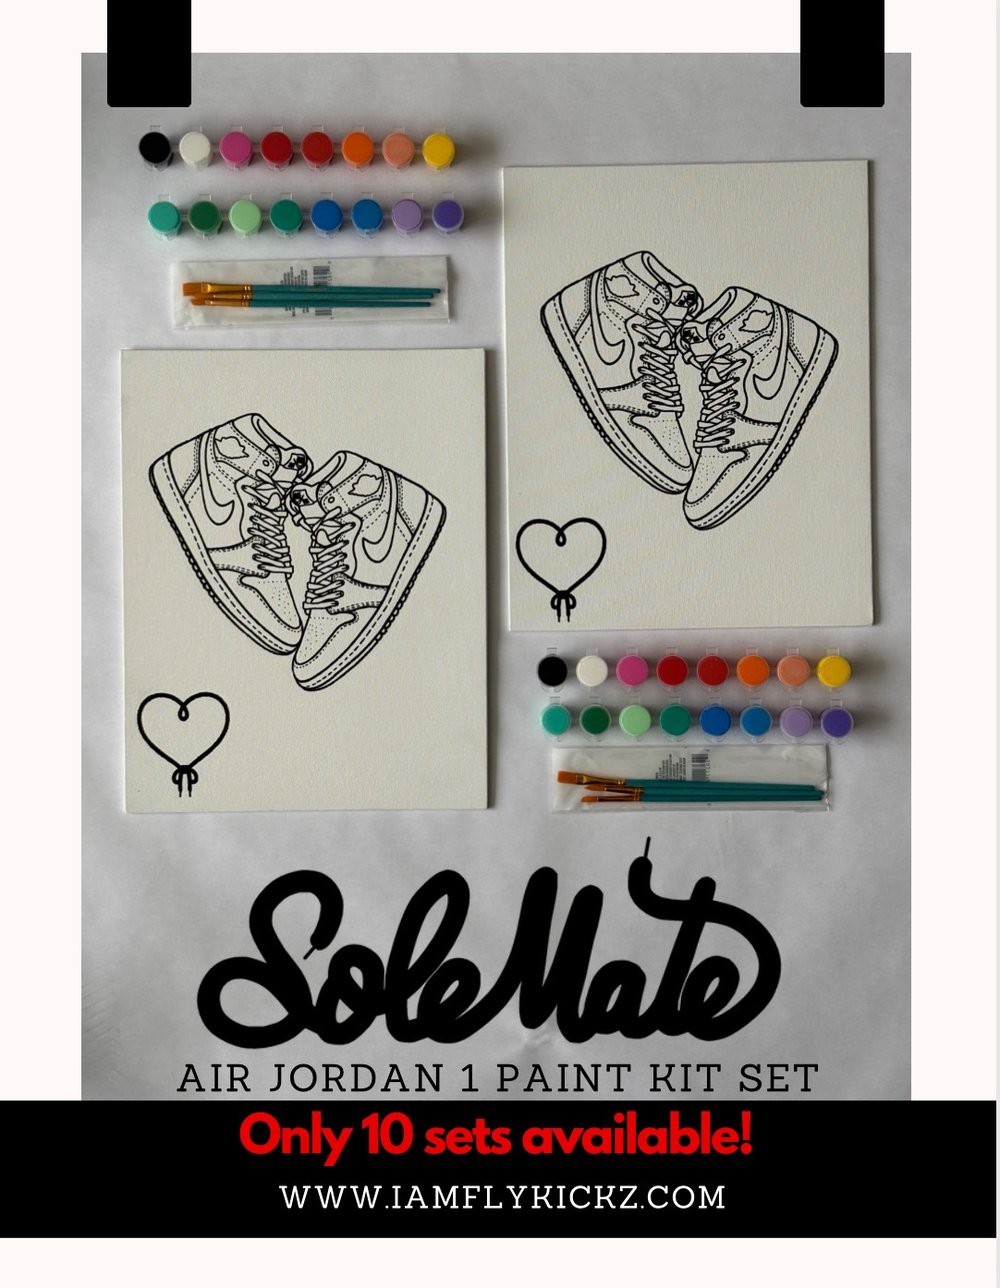 Air Jordan 1 Paint Kit Set